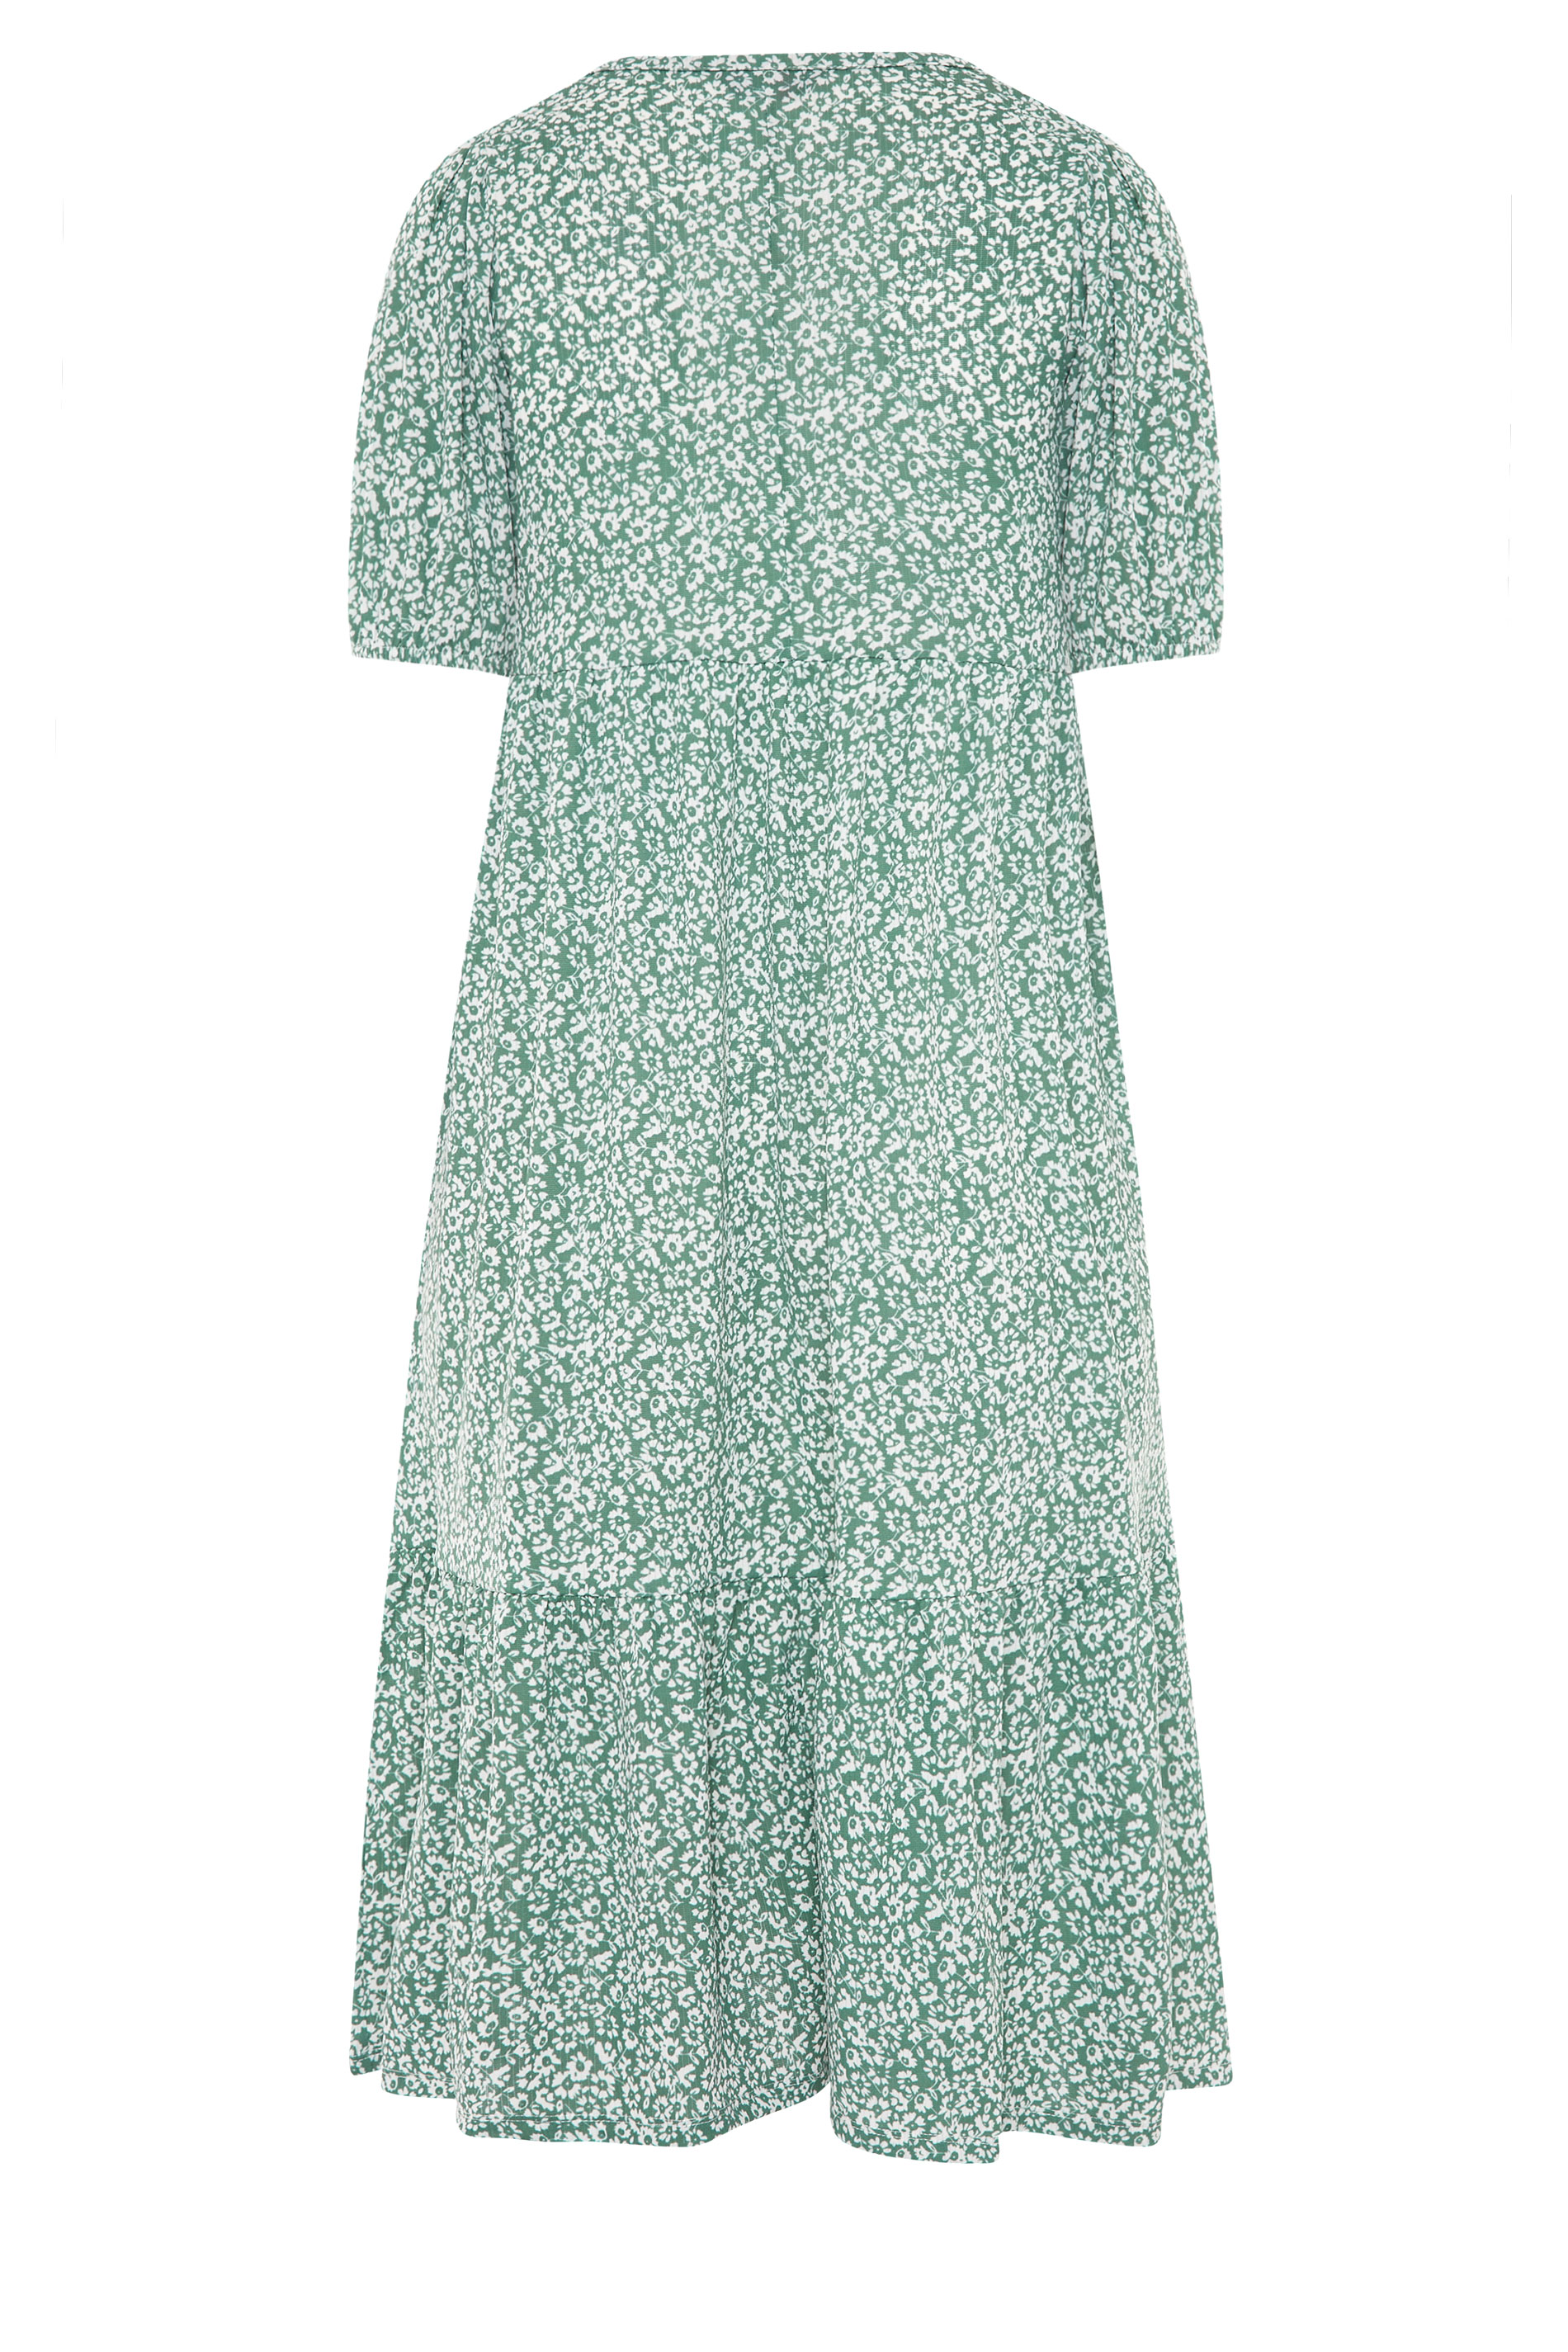 Sage Green Floral Frill Hem Midi Dress | Yours Clothing